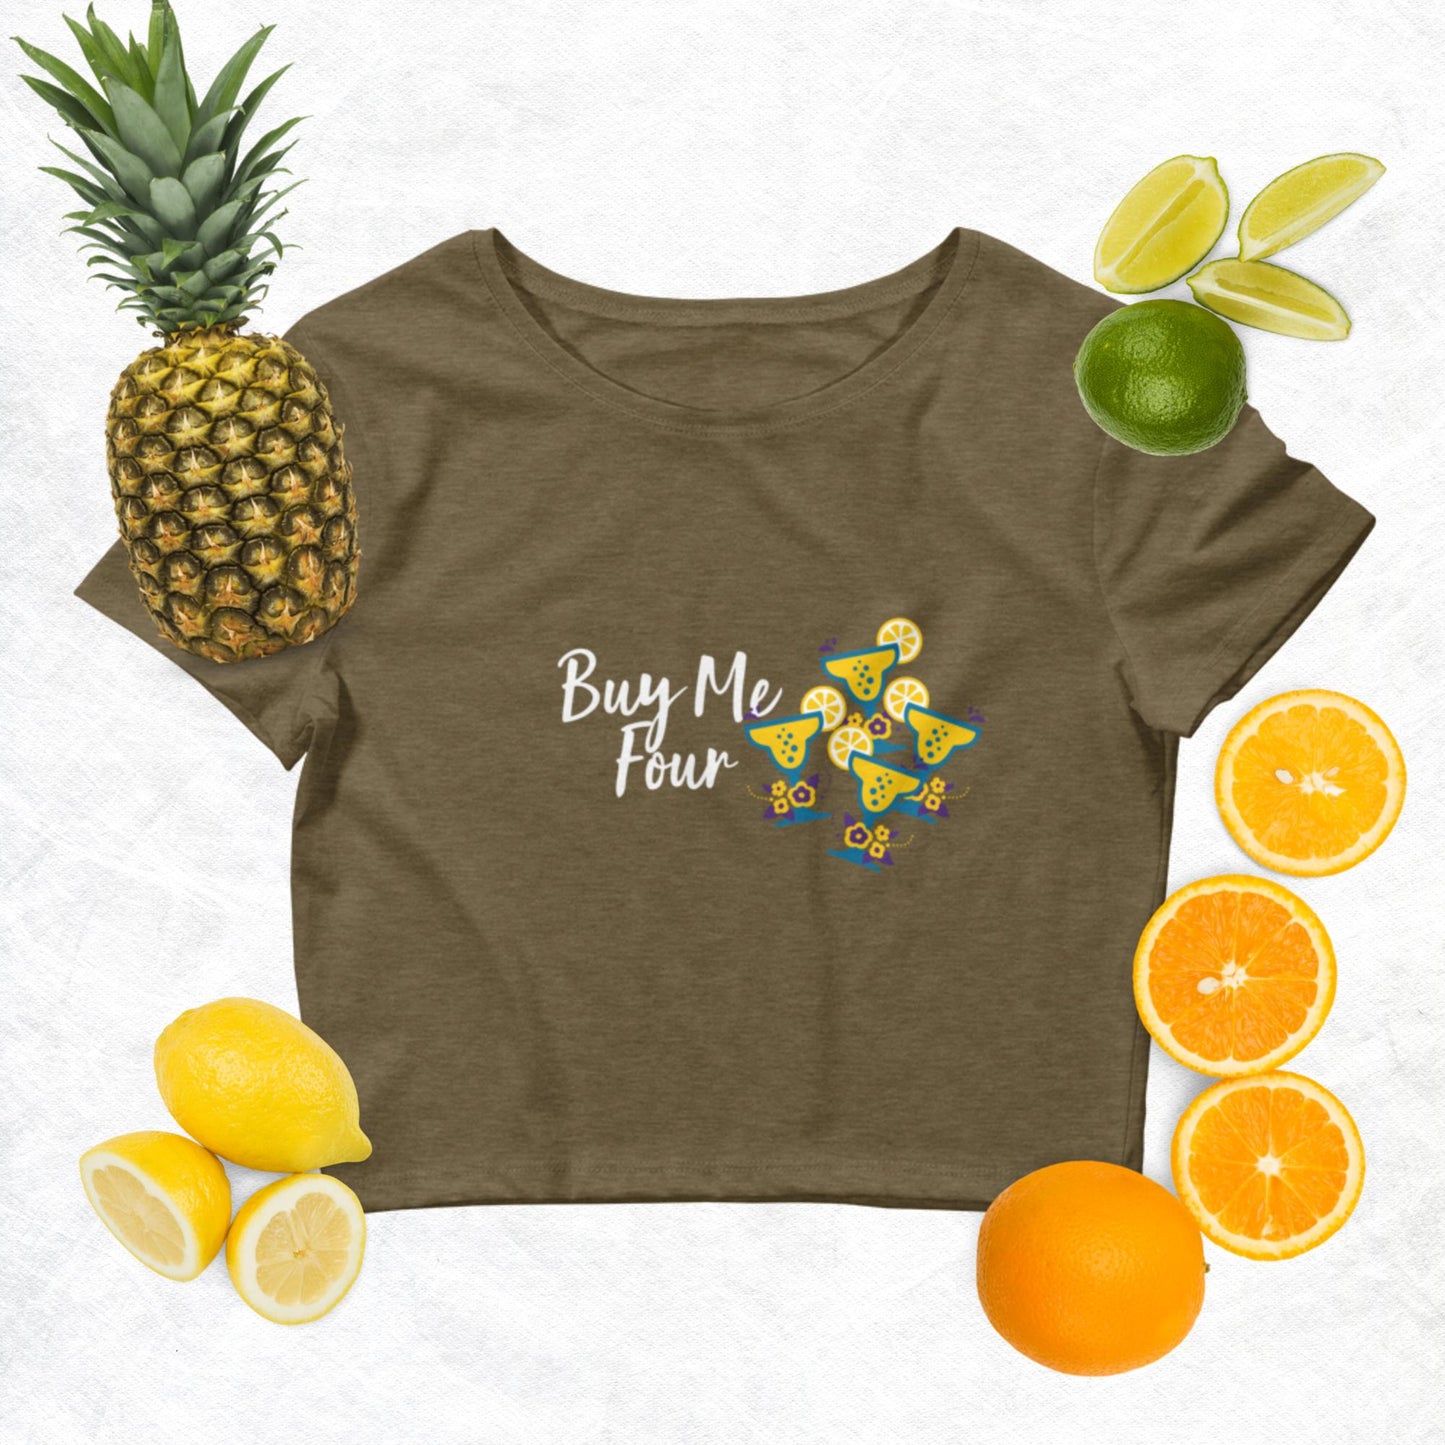 Buy Me Four Margaritas Camiseta corta para mujer